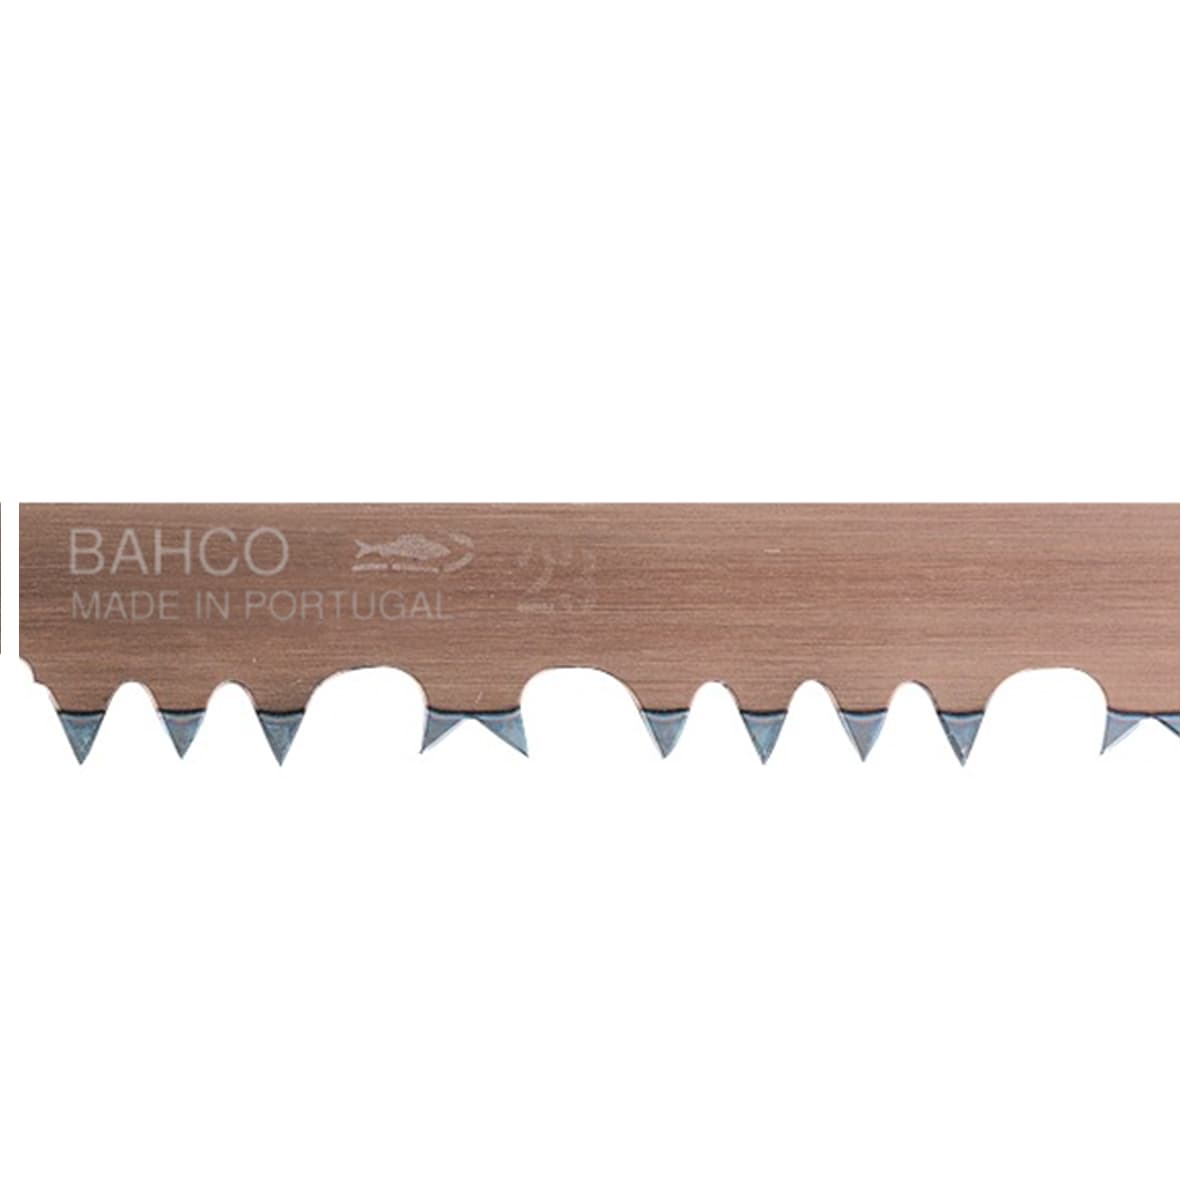 Bahco Bucksaw / Bow Saw Replacement Blade - Green / Dry Wood - Raker Teeth